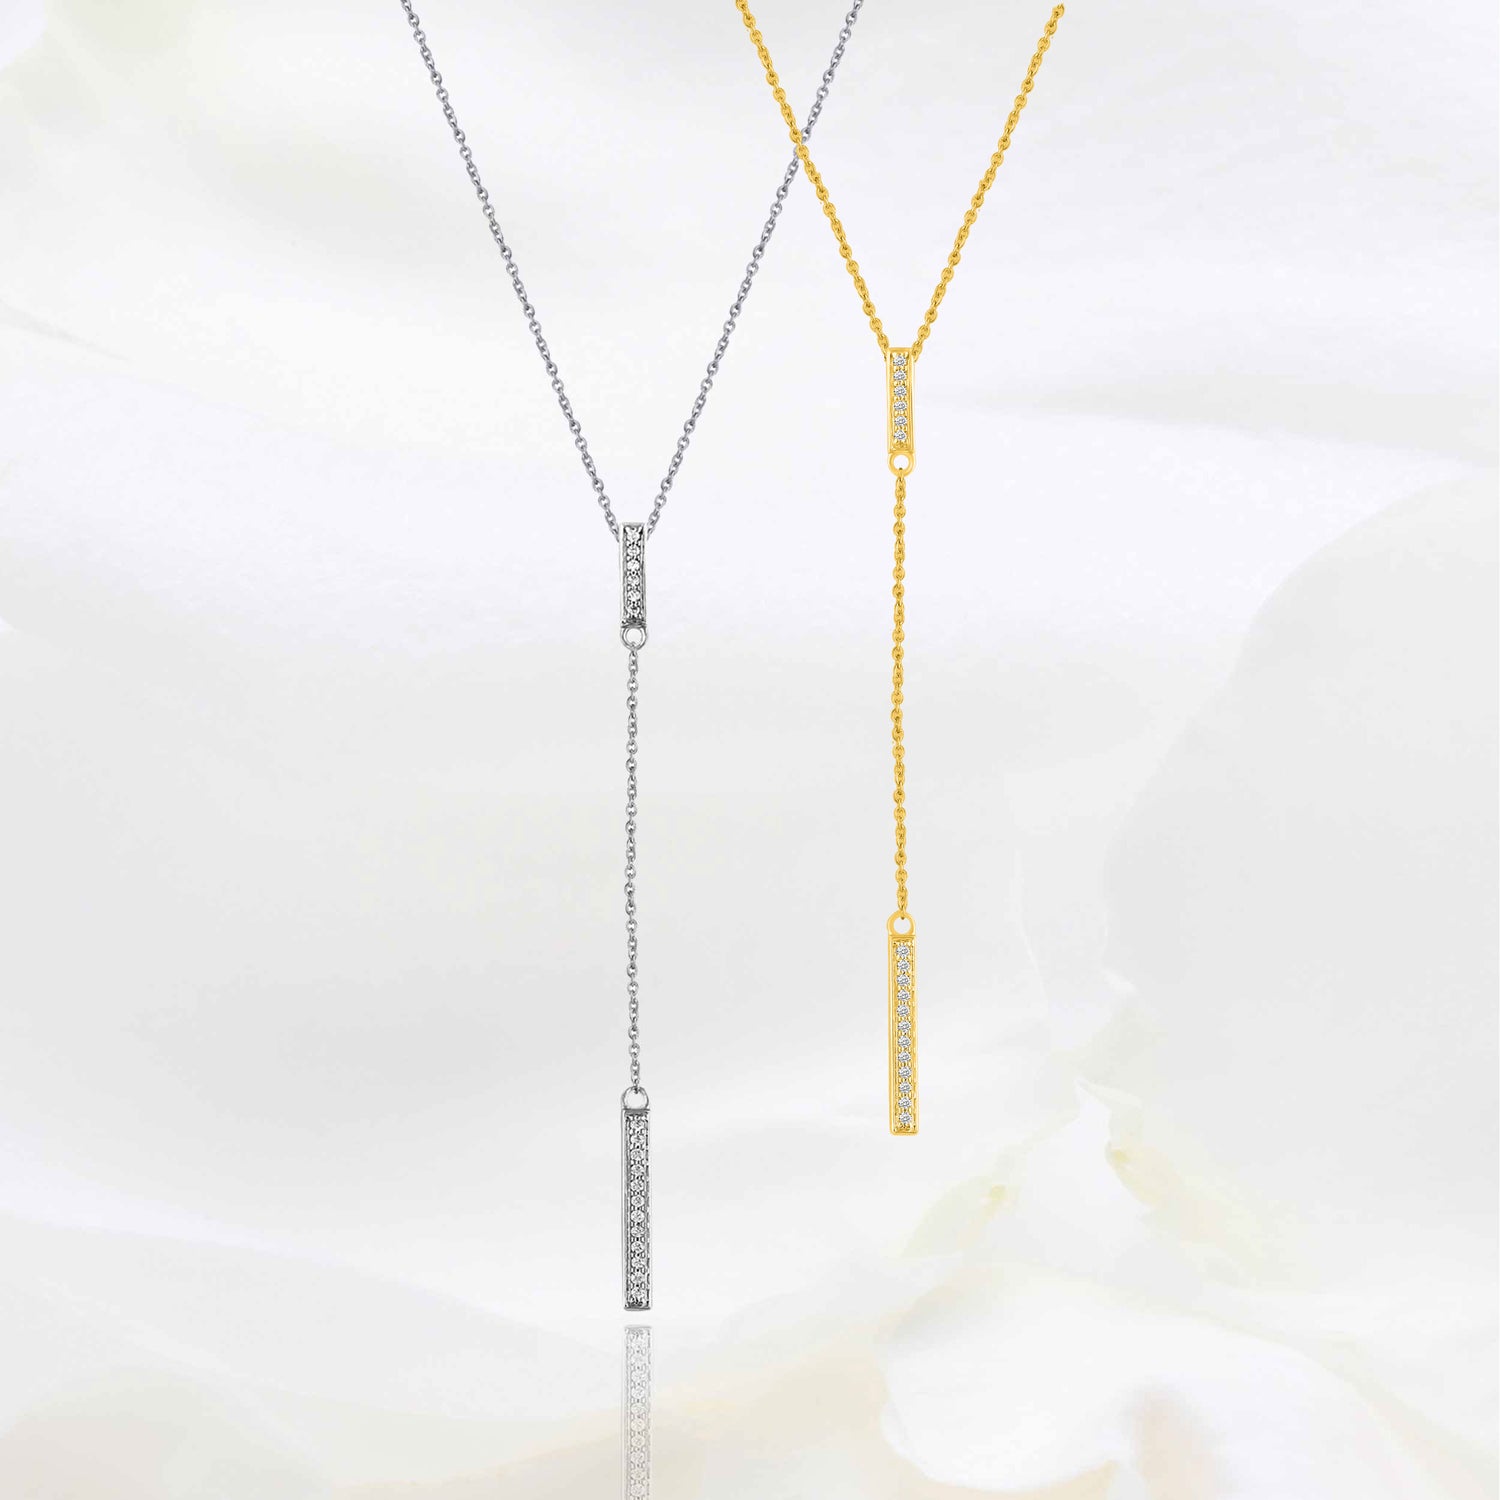 1/2 ctw Natural Diamond Lock Charm Pendant Necklace